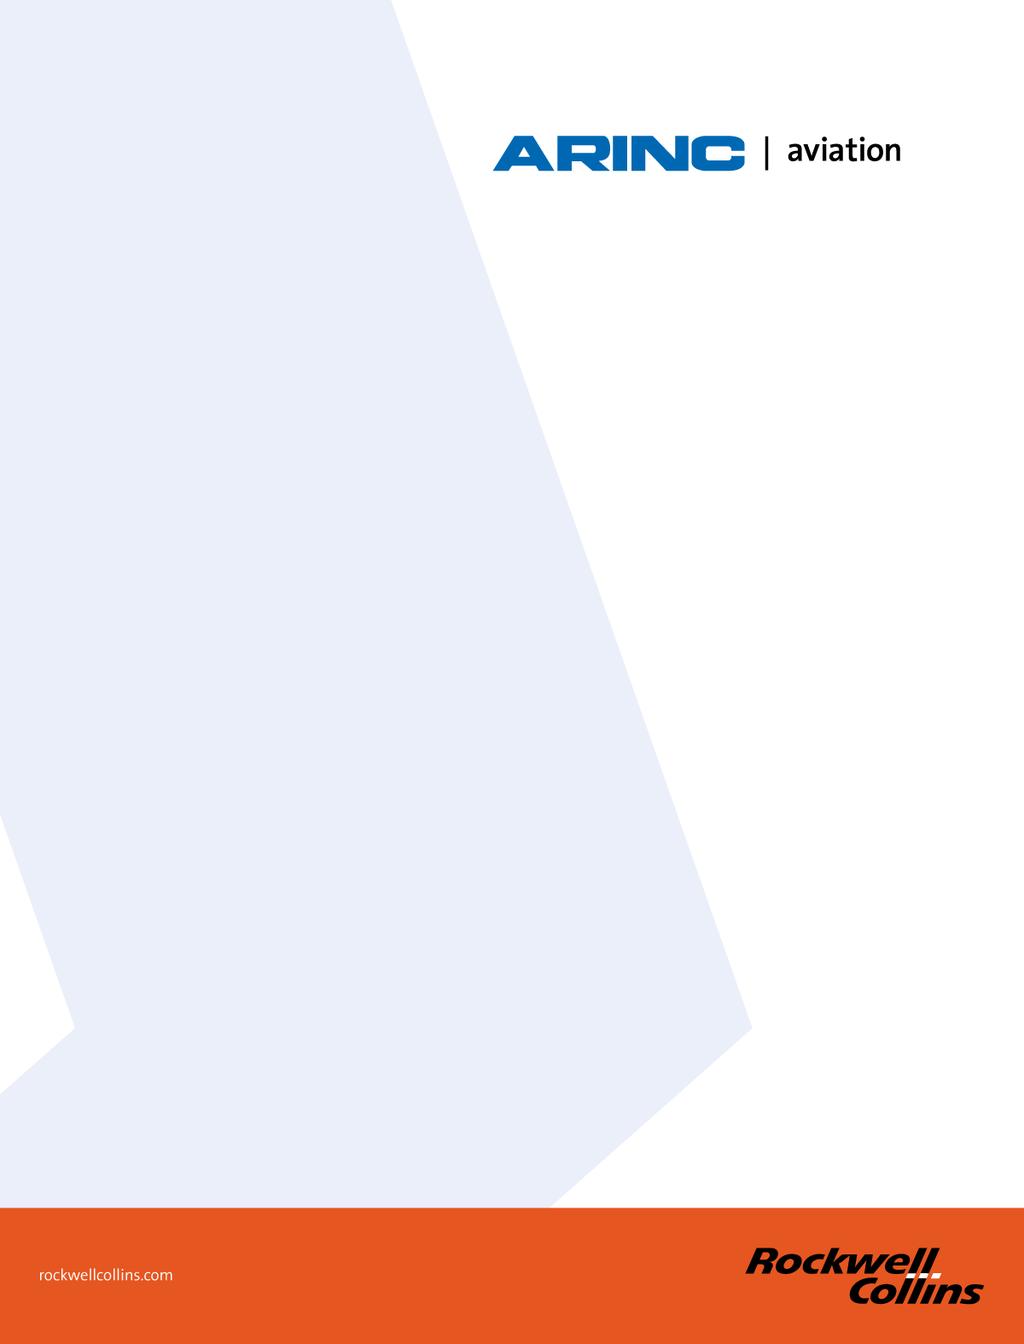 Aviation Voice Services Operating Procedures Handbook Prepared by: Aviation Voice